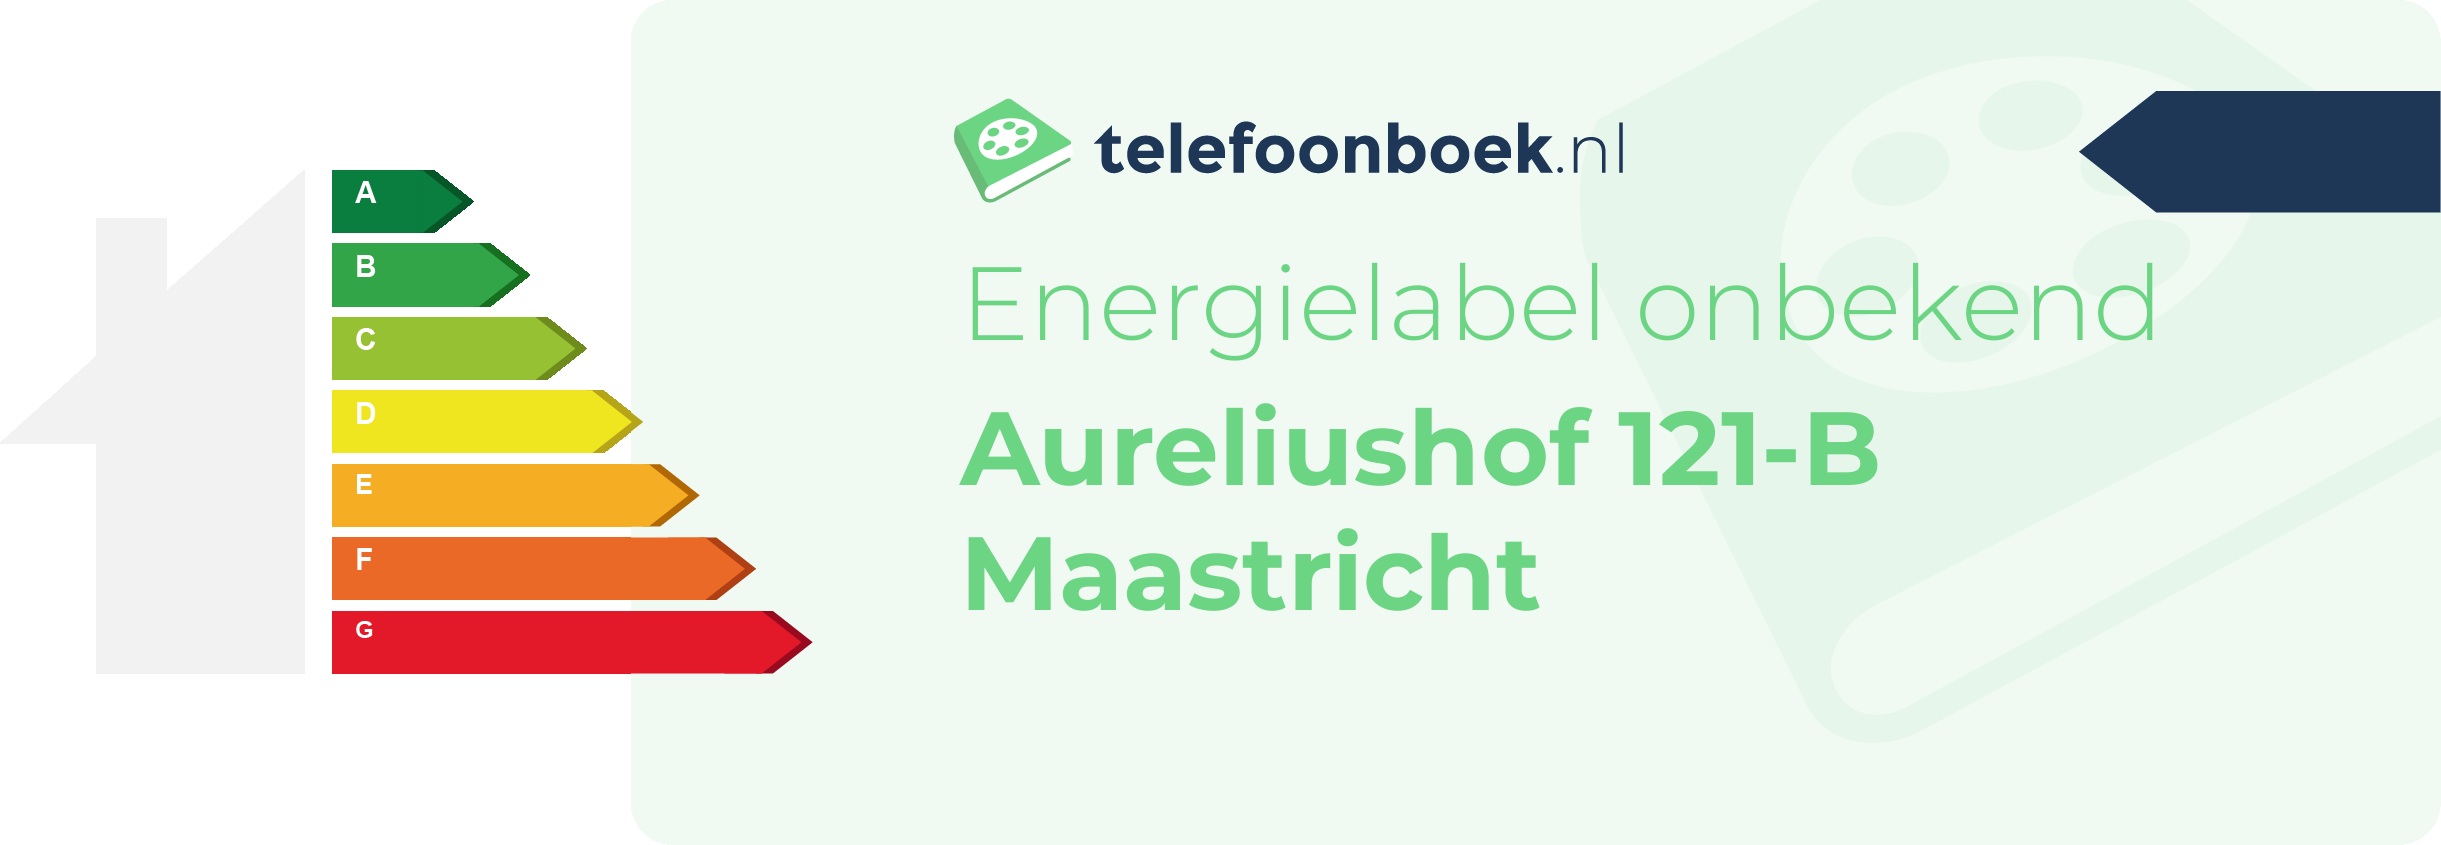 Energielabel Aureliushof 121-B Maastricht